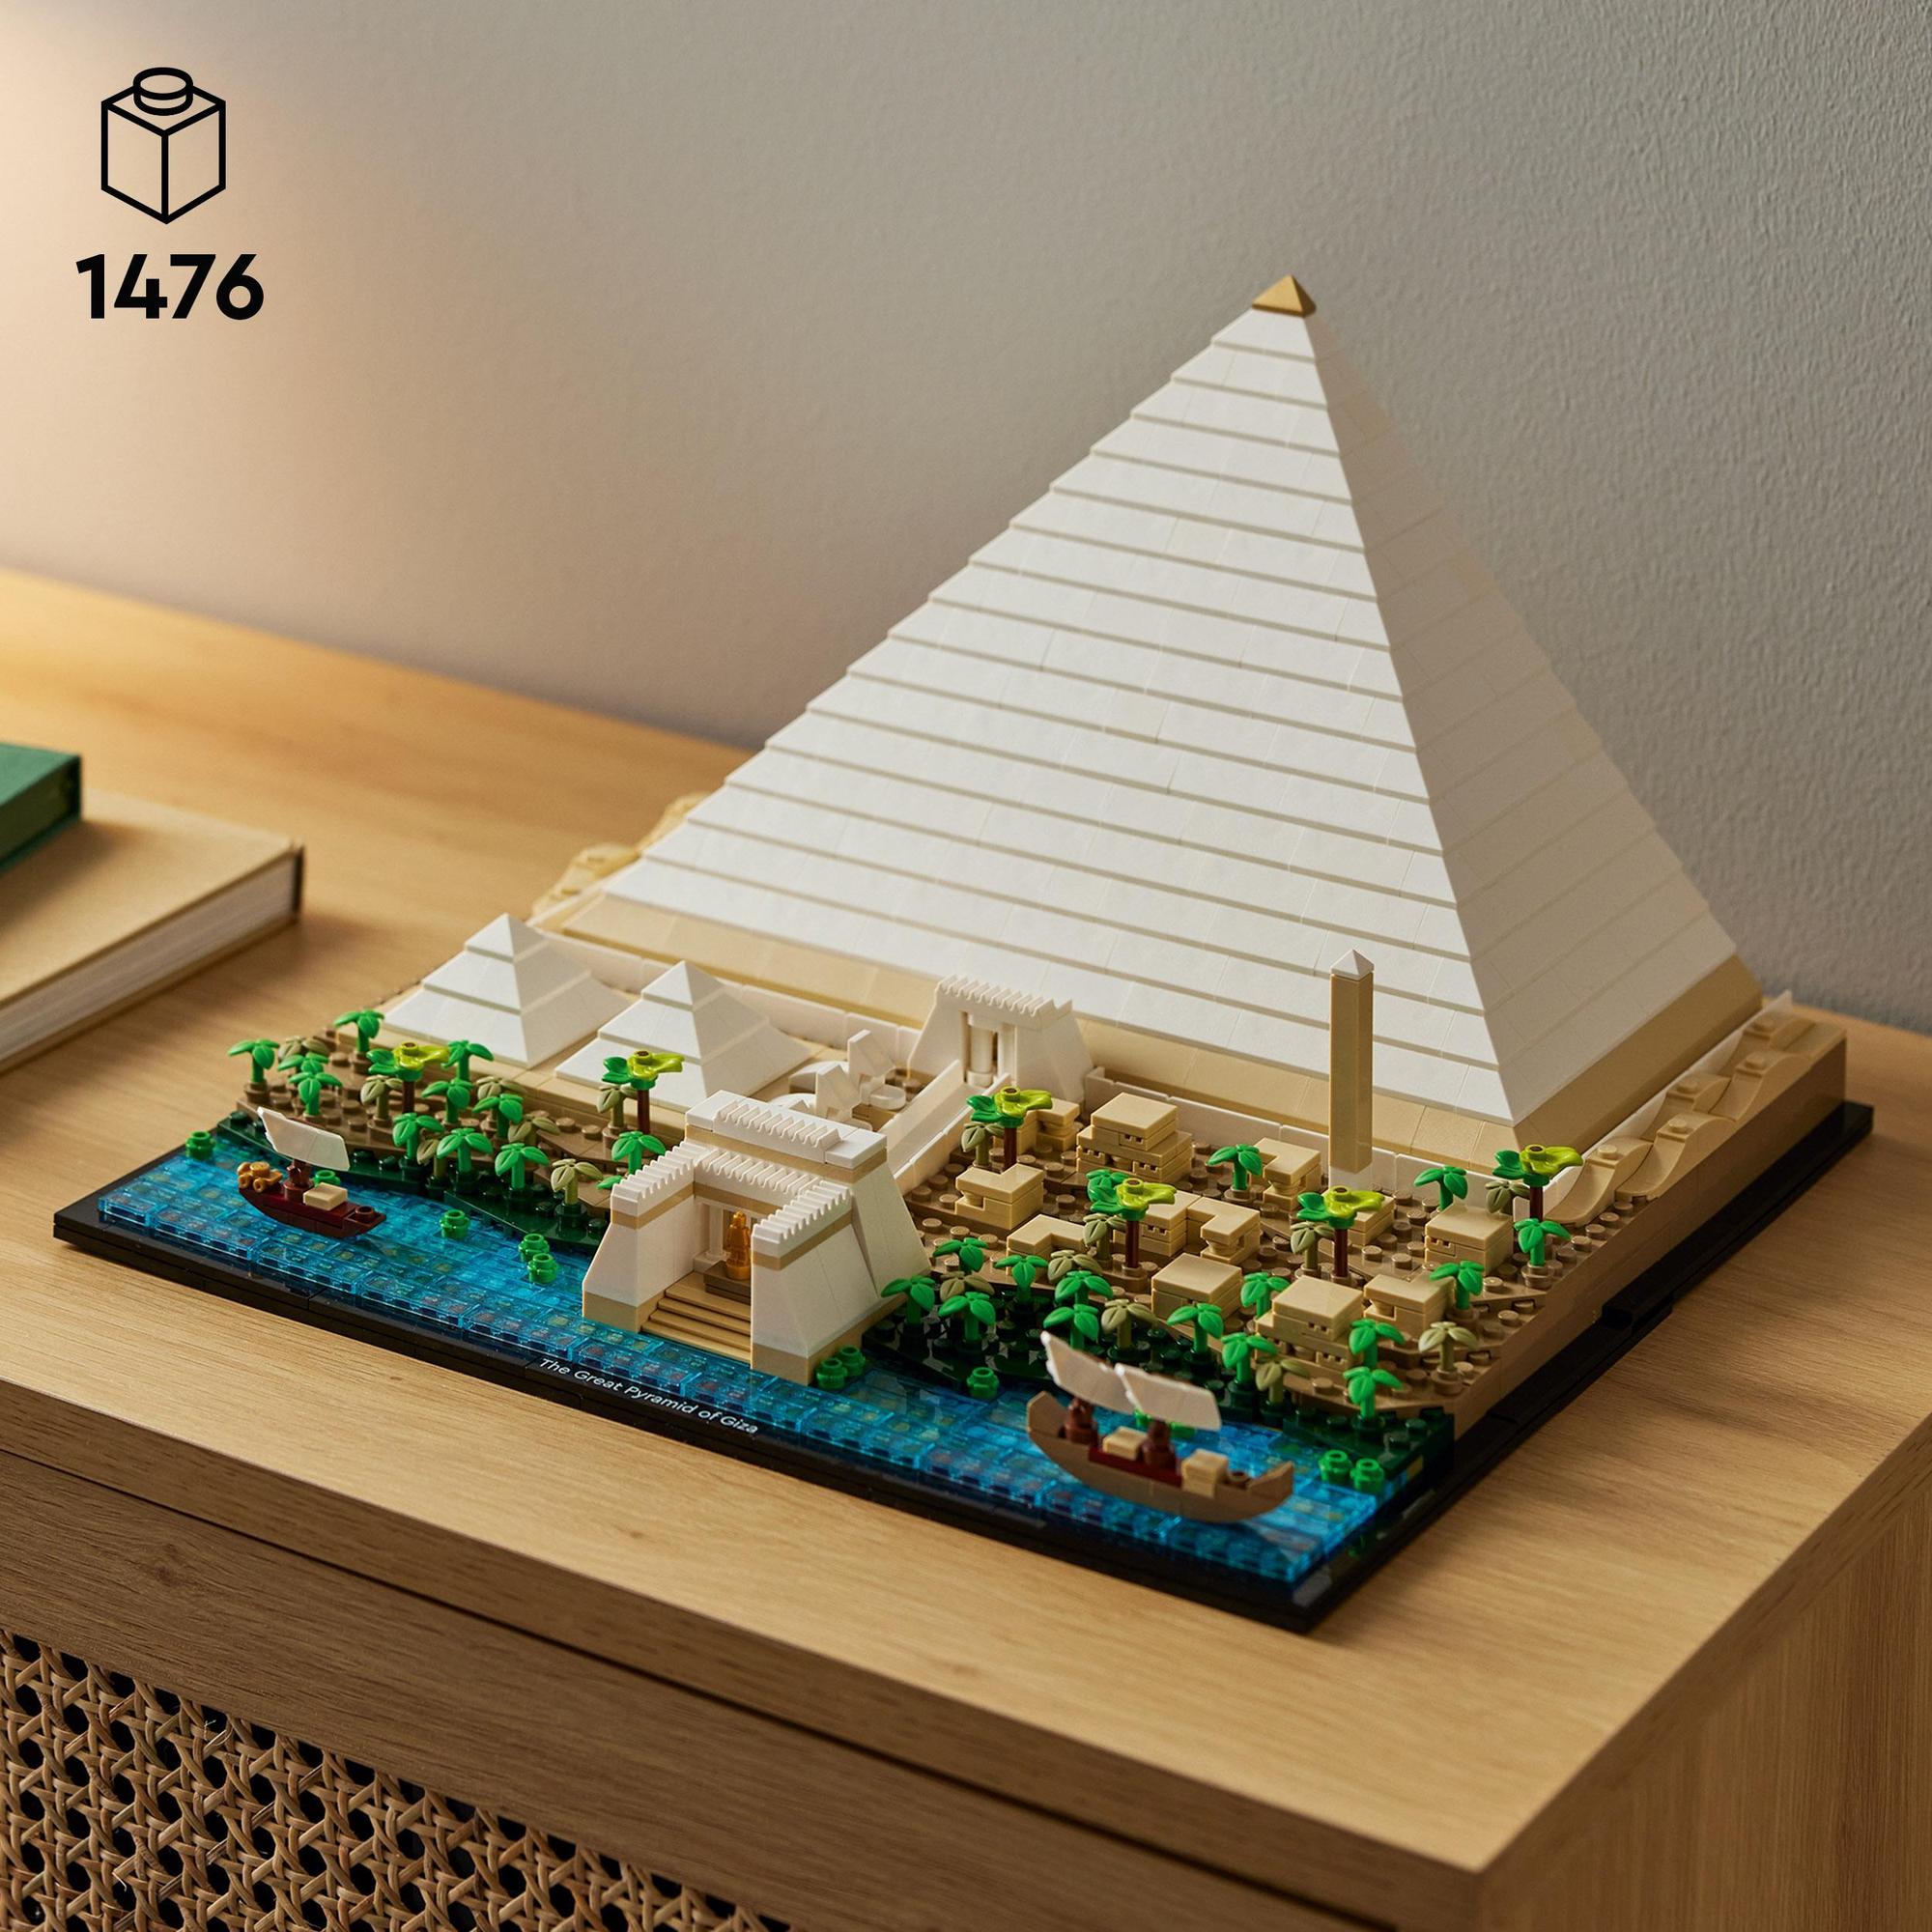 LEGO® | 21058 | Cheops-Pyramide